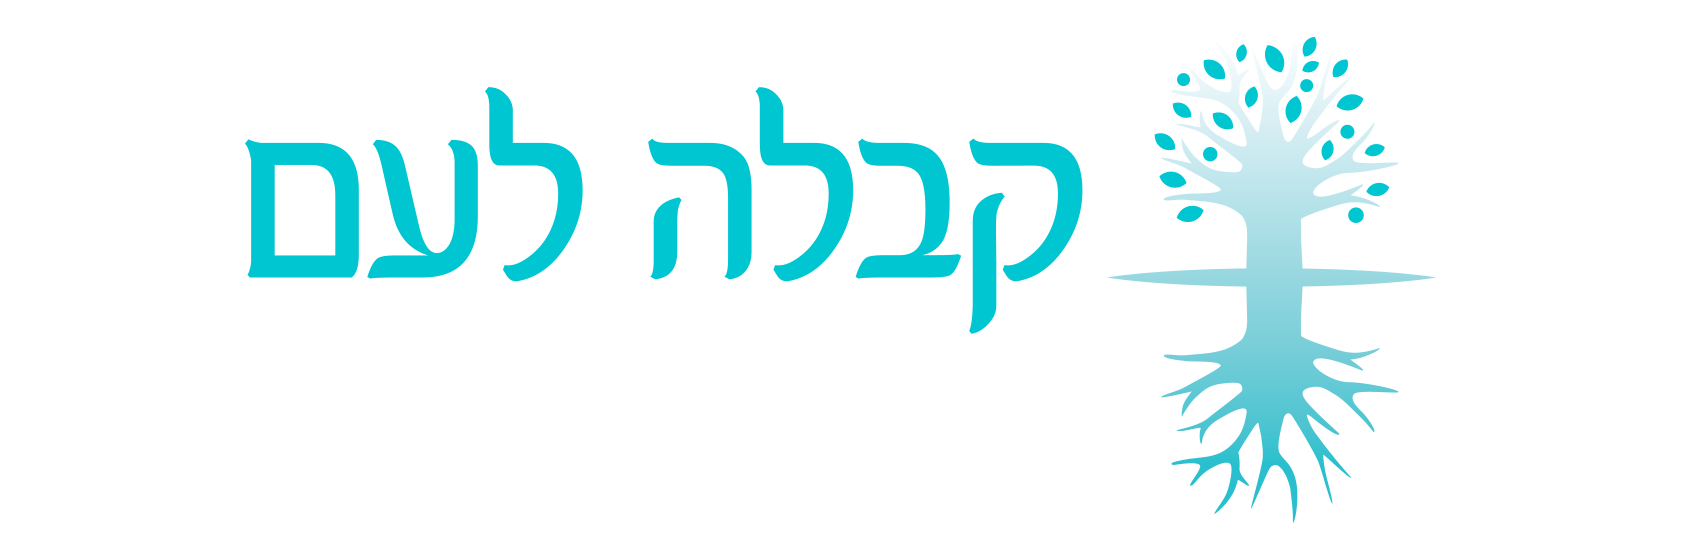 antisemitism.kab.co.il